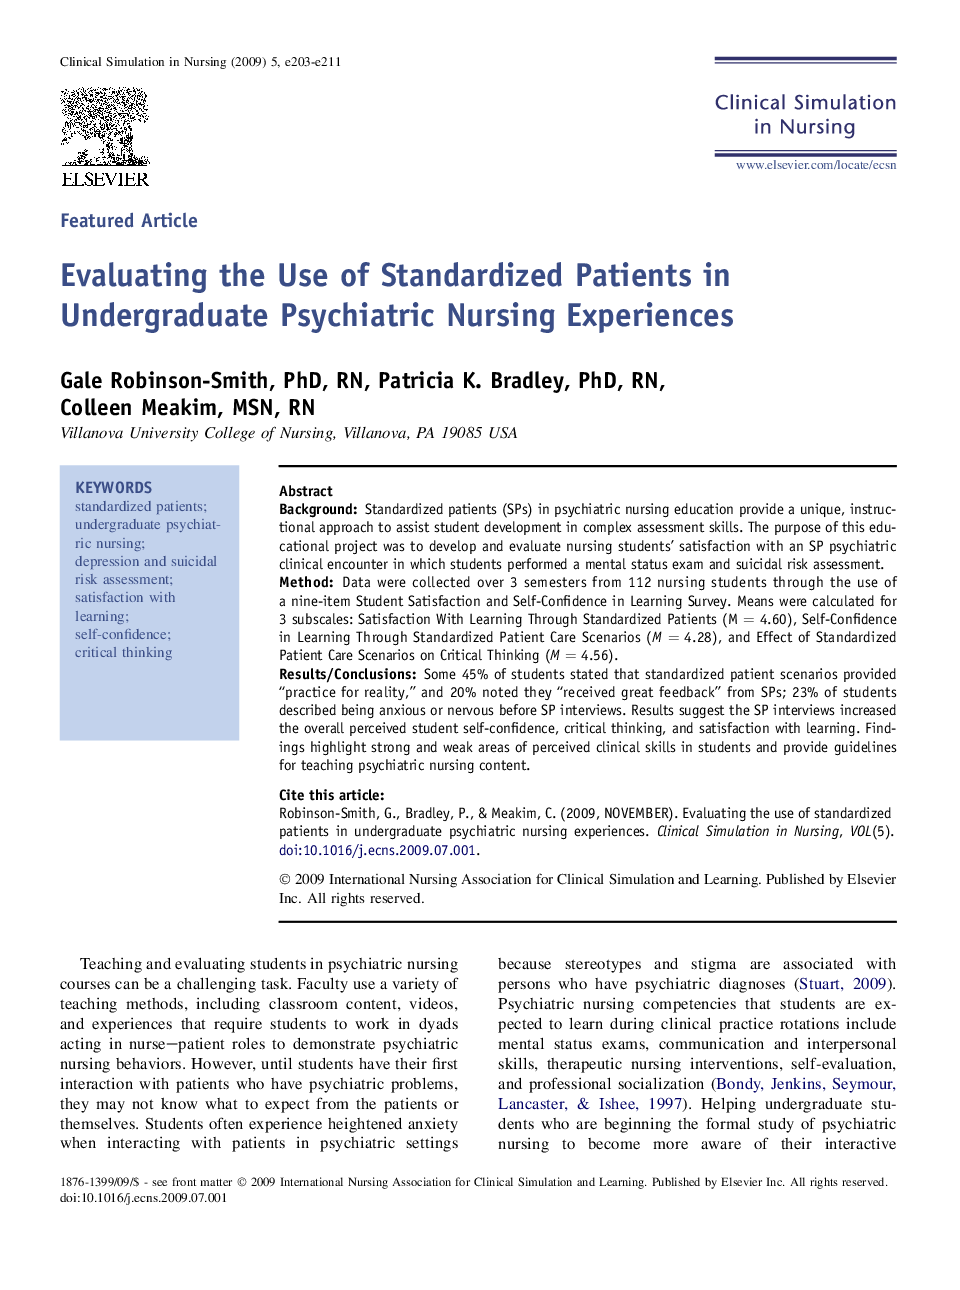 Evaluating the Use of Standardized Patients in Undergraduate Psychiatric Nursing Experiences 